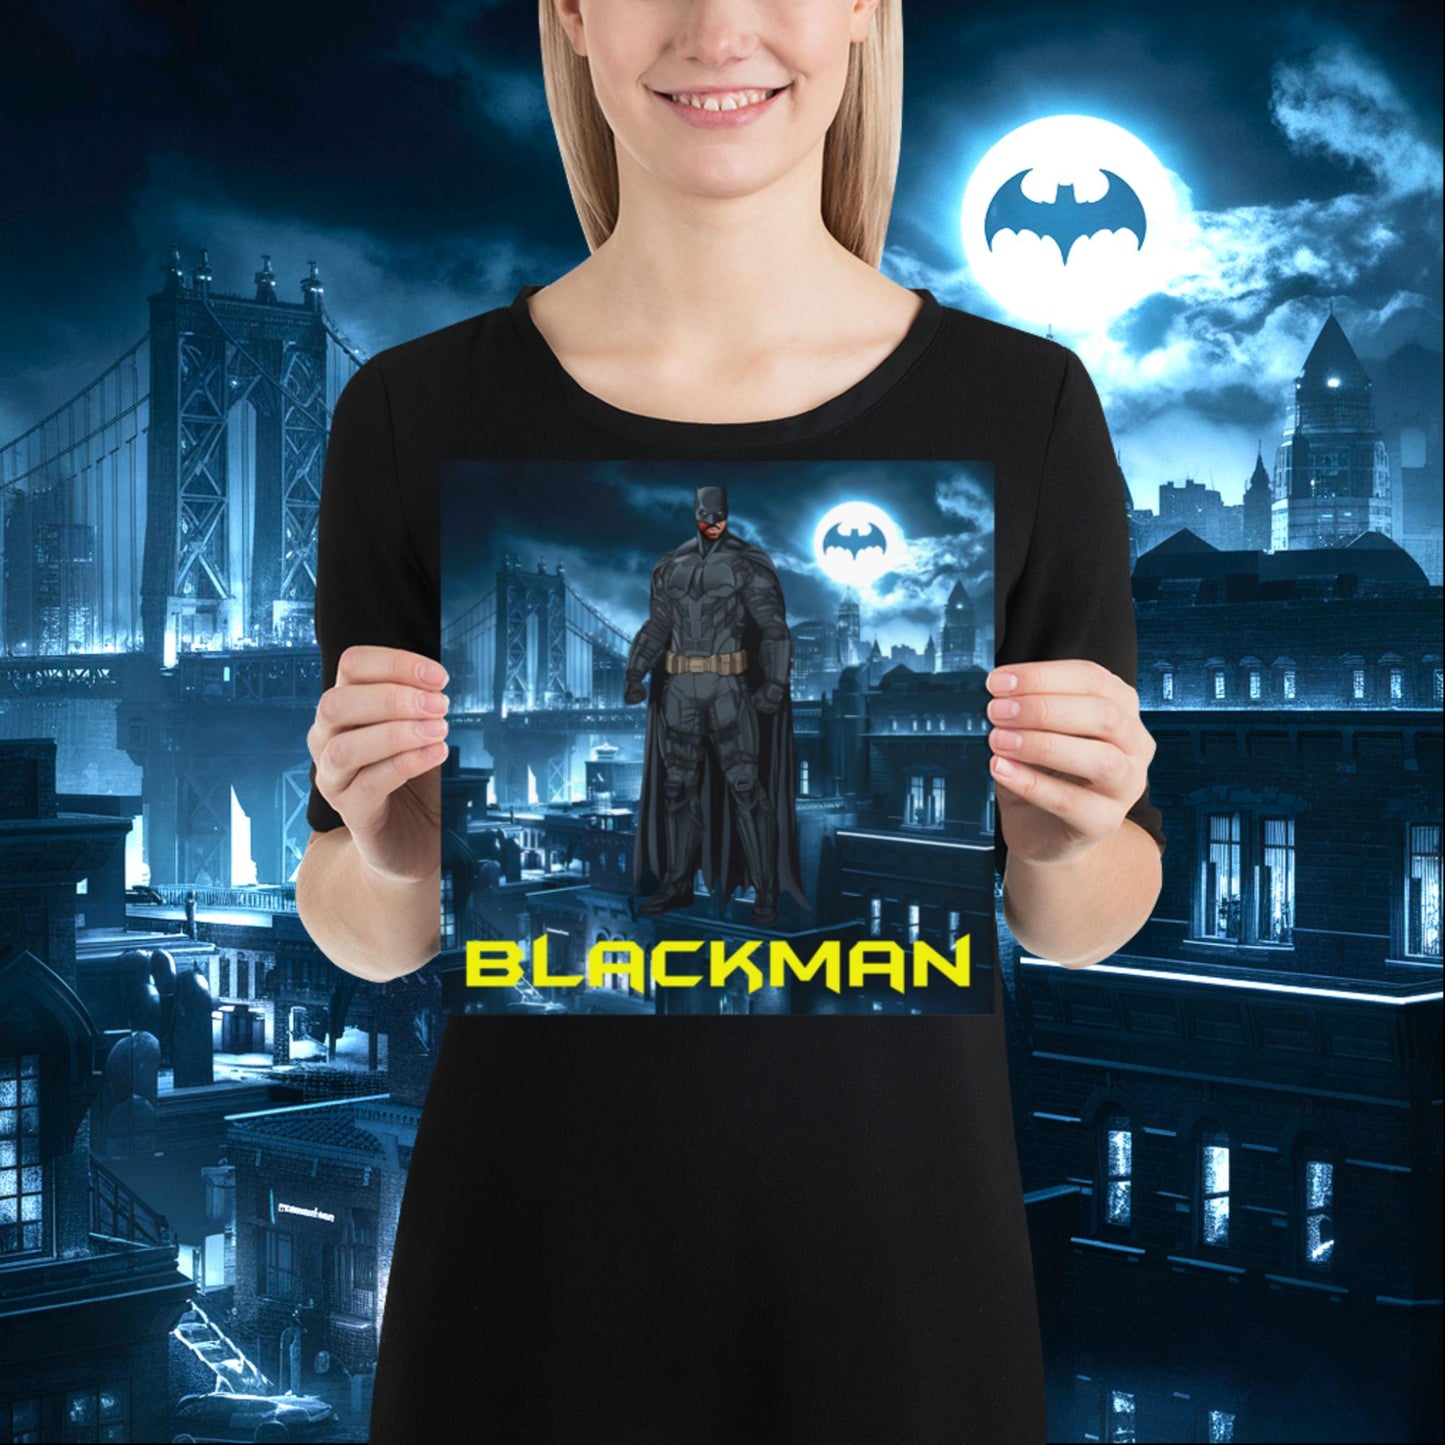 Blackman Batman Black Superhero Poster Next Cult Brand